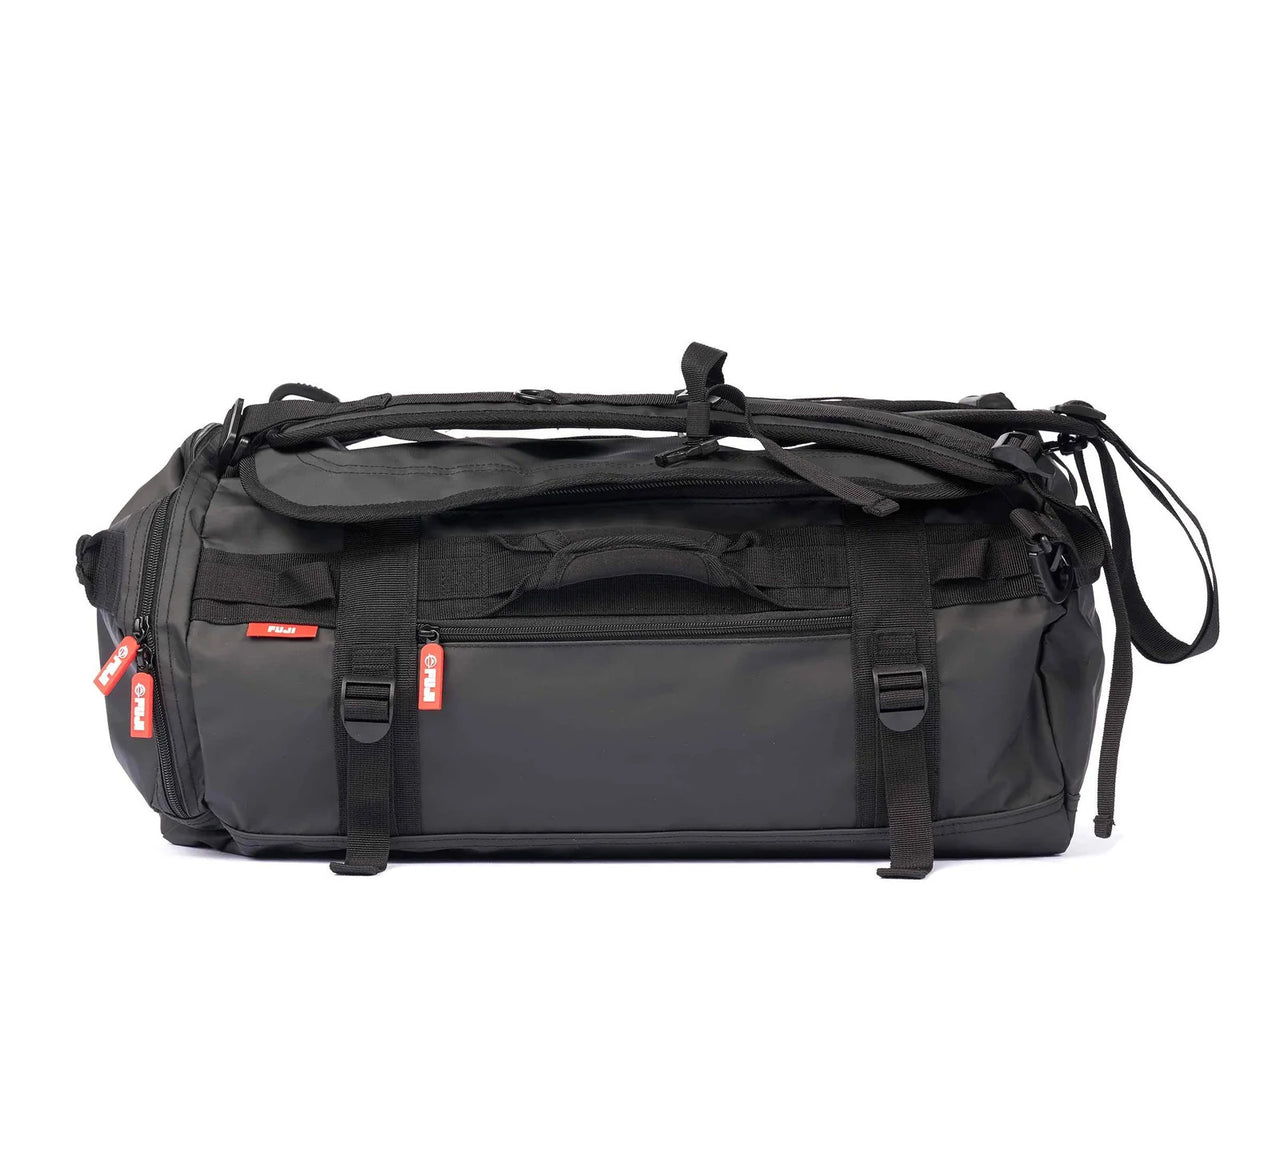 Fuji Comp Convertible Backpack Duffle - Black